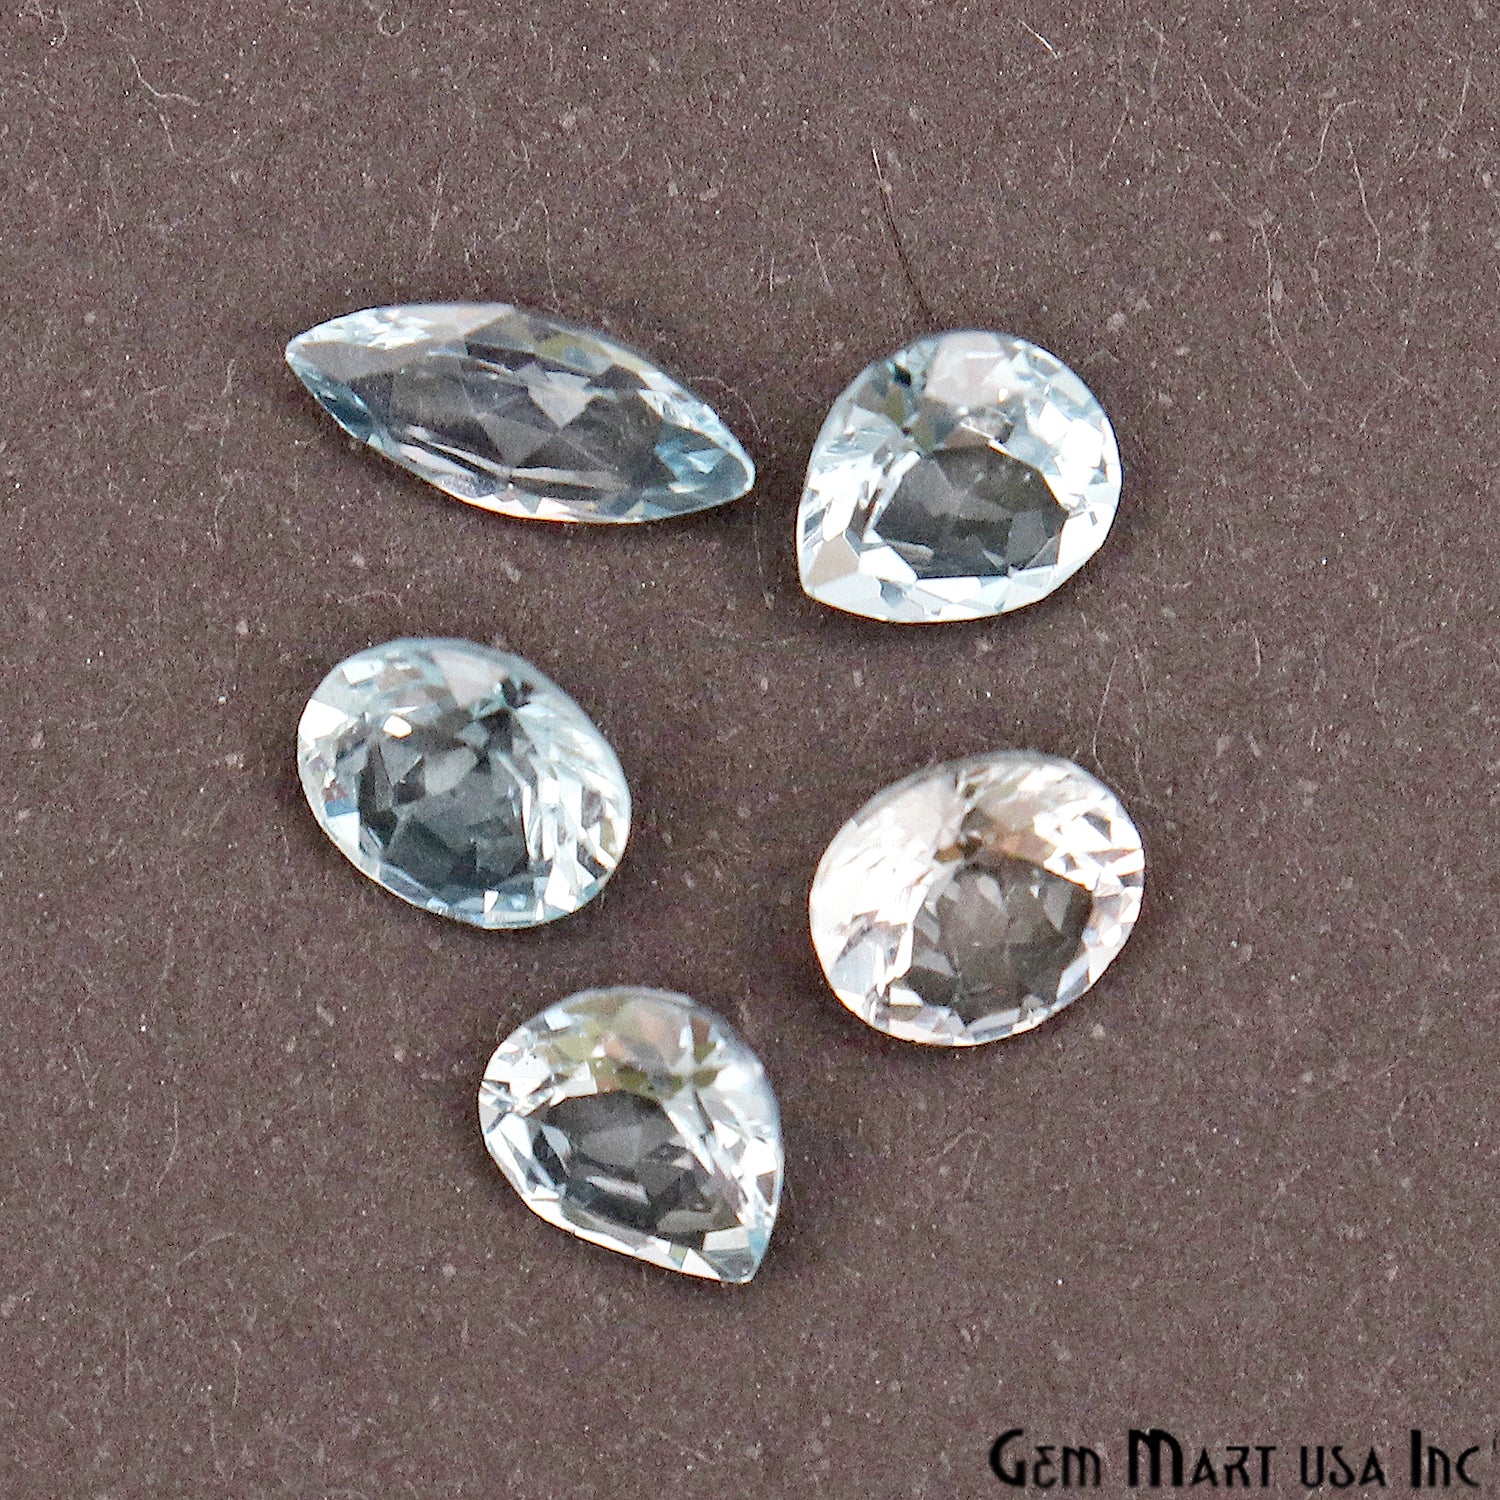 5ct Aquamarine Gemstone Mix Shape Bead Cabochons Loose Precious Stones - GemMartUSA